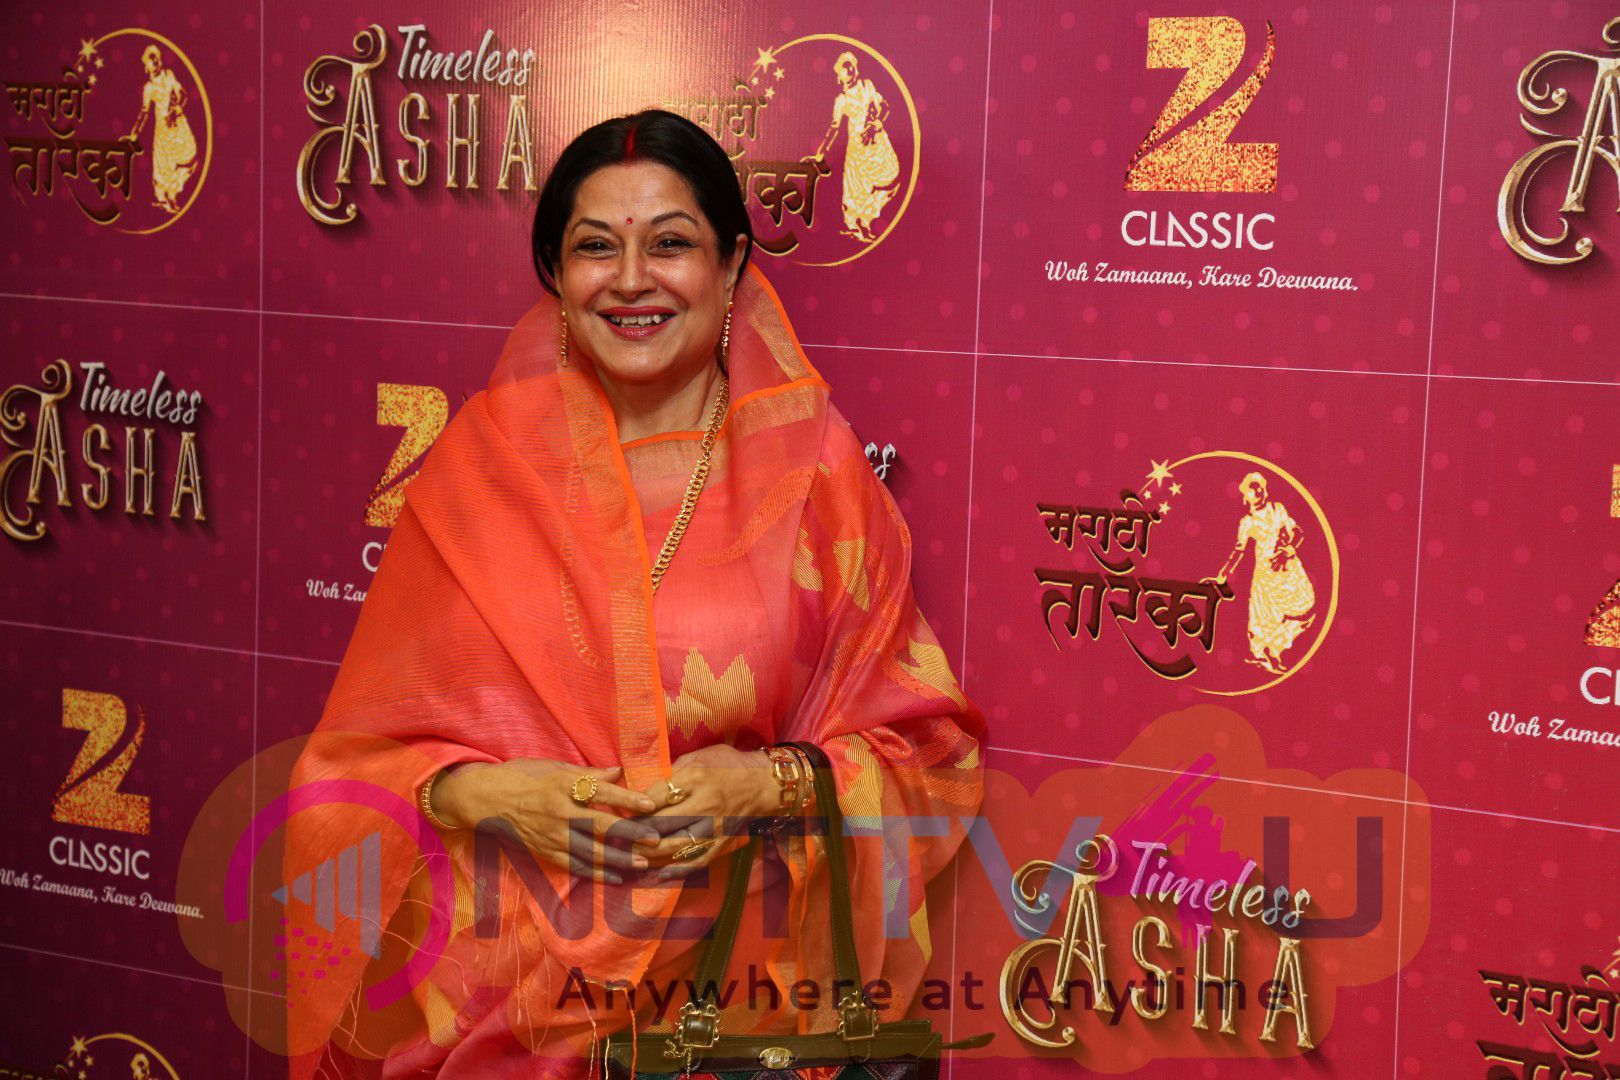 Zee Classic Celebrate Asha Bhosle 83rd Birthday A Musical Concert Timeless Asha Pics Hindi Gallery